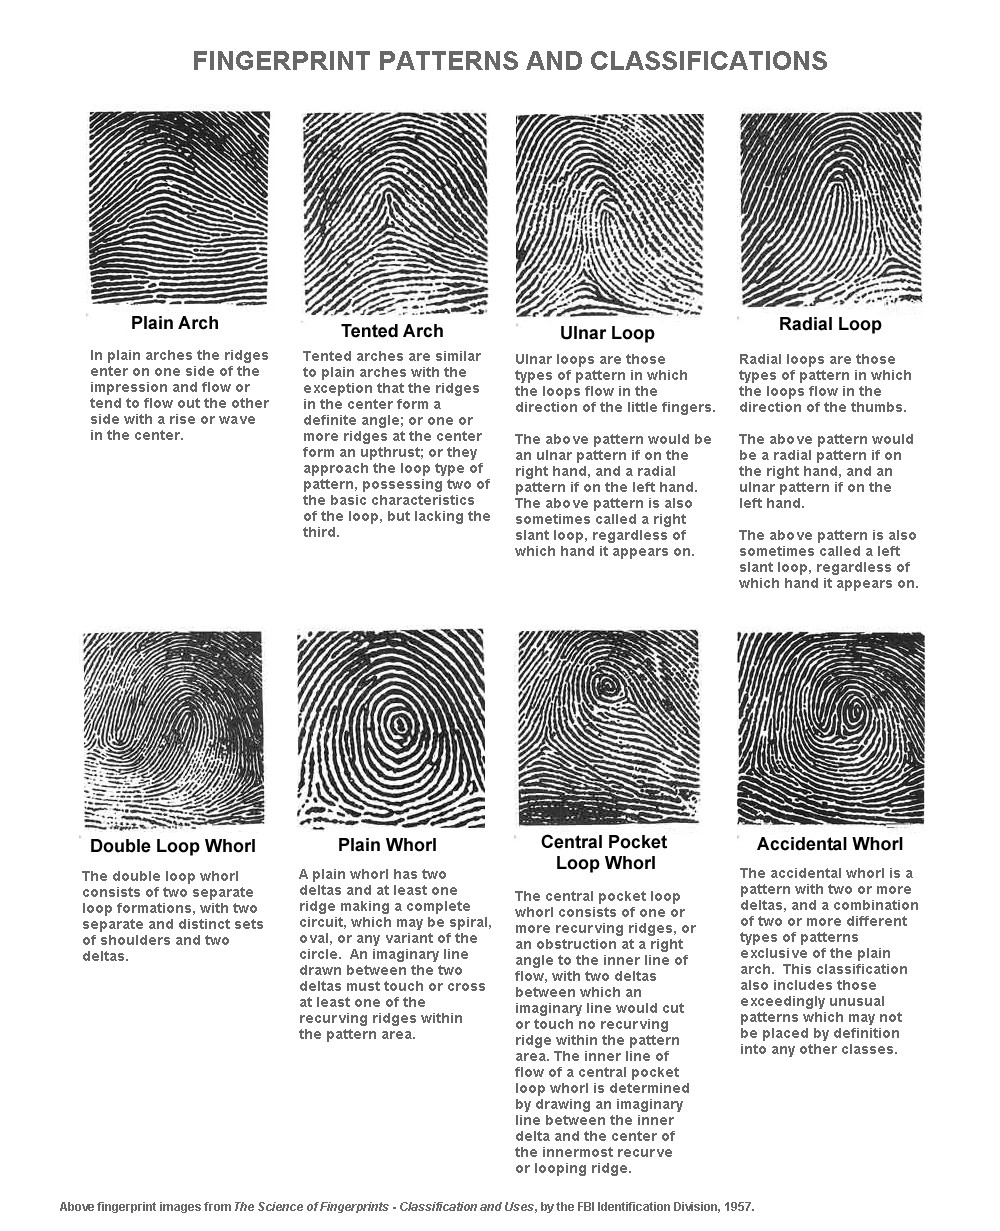 Modern fingerprint classification includes 8 types of fingerprints.